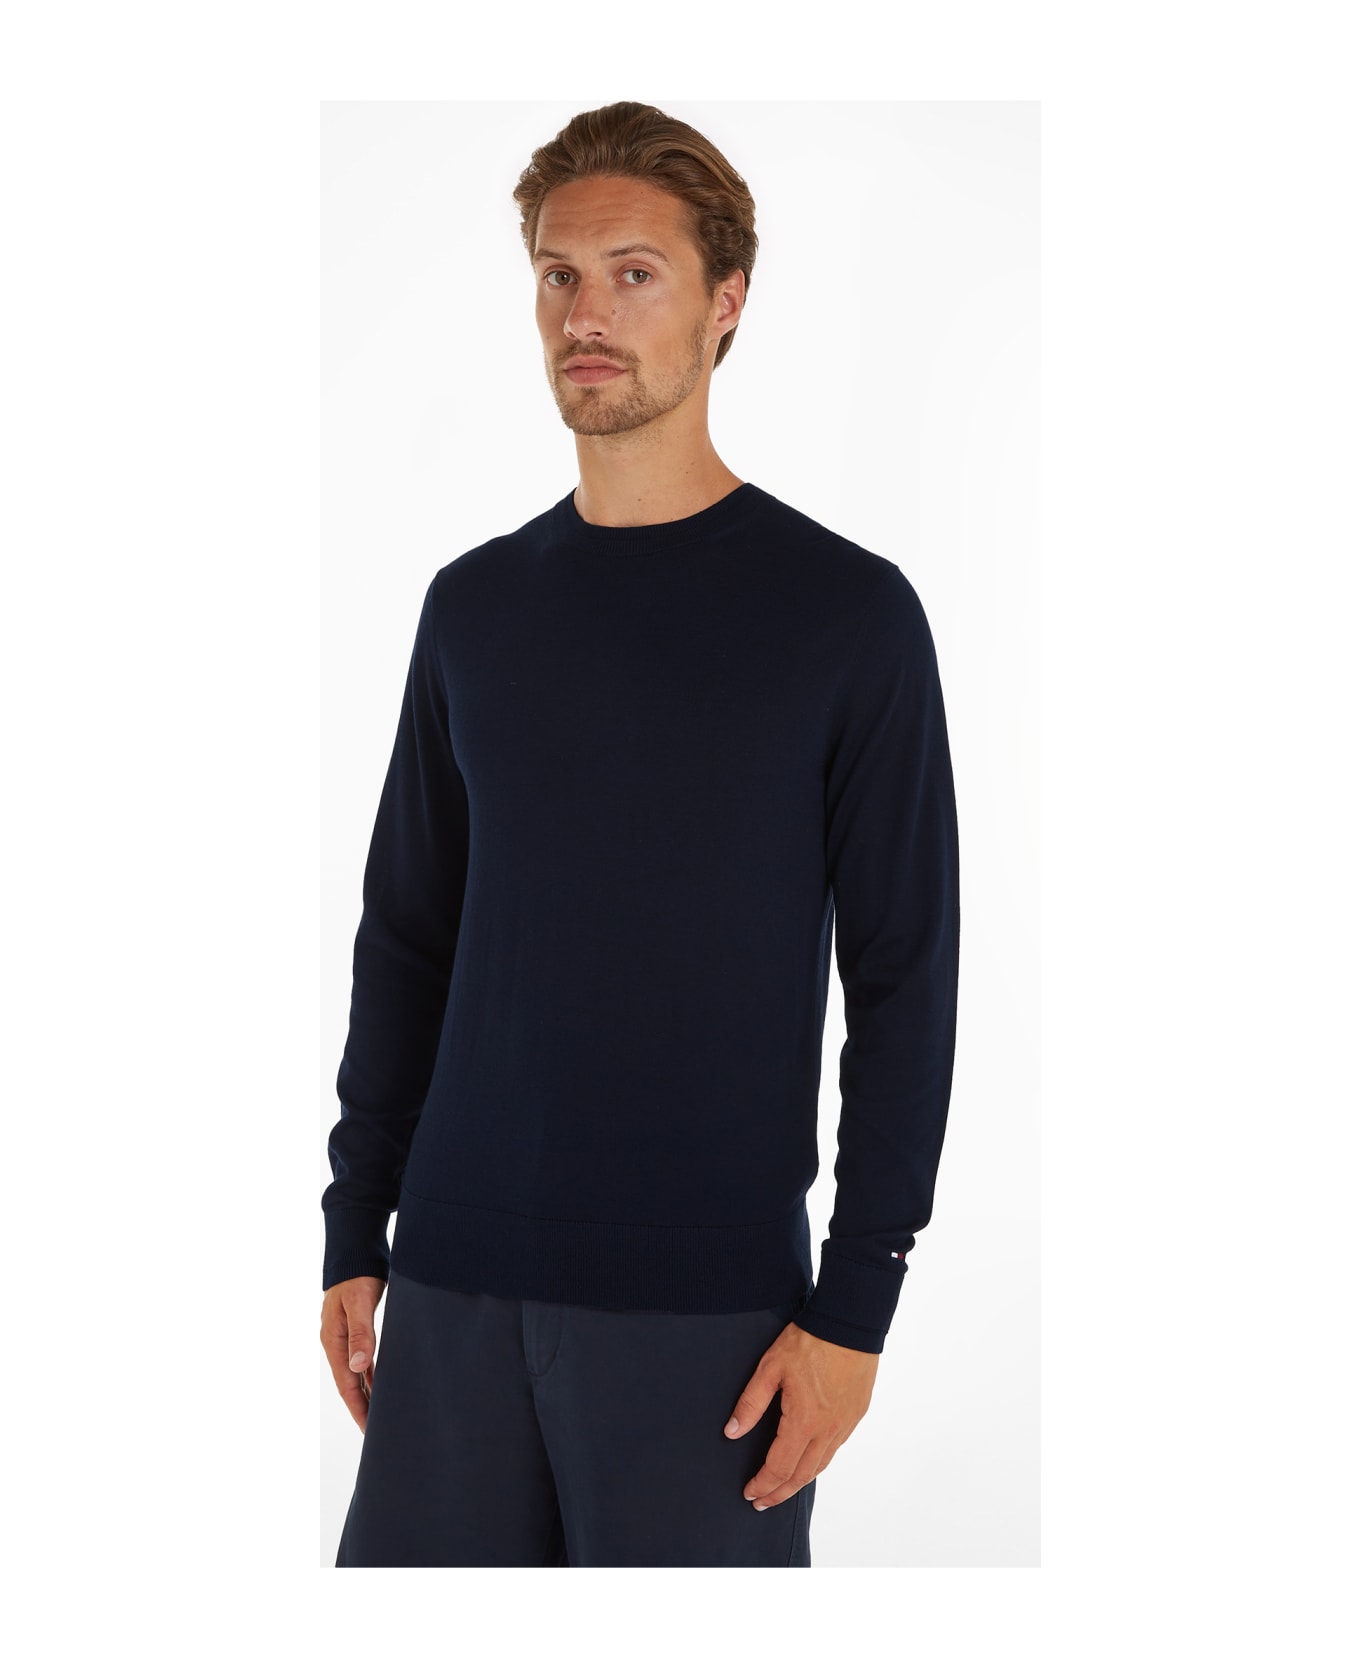 Tommy Hilfiger Navy Blue Crew Neck Sweater - DESERT SKY